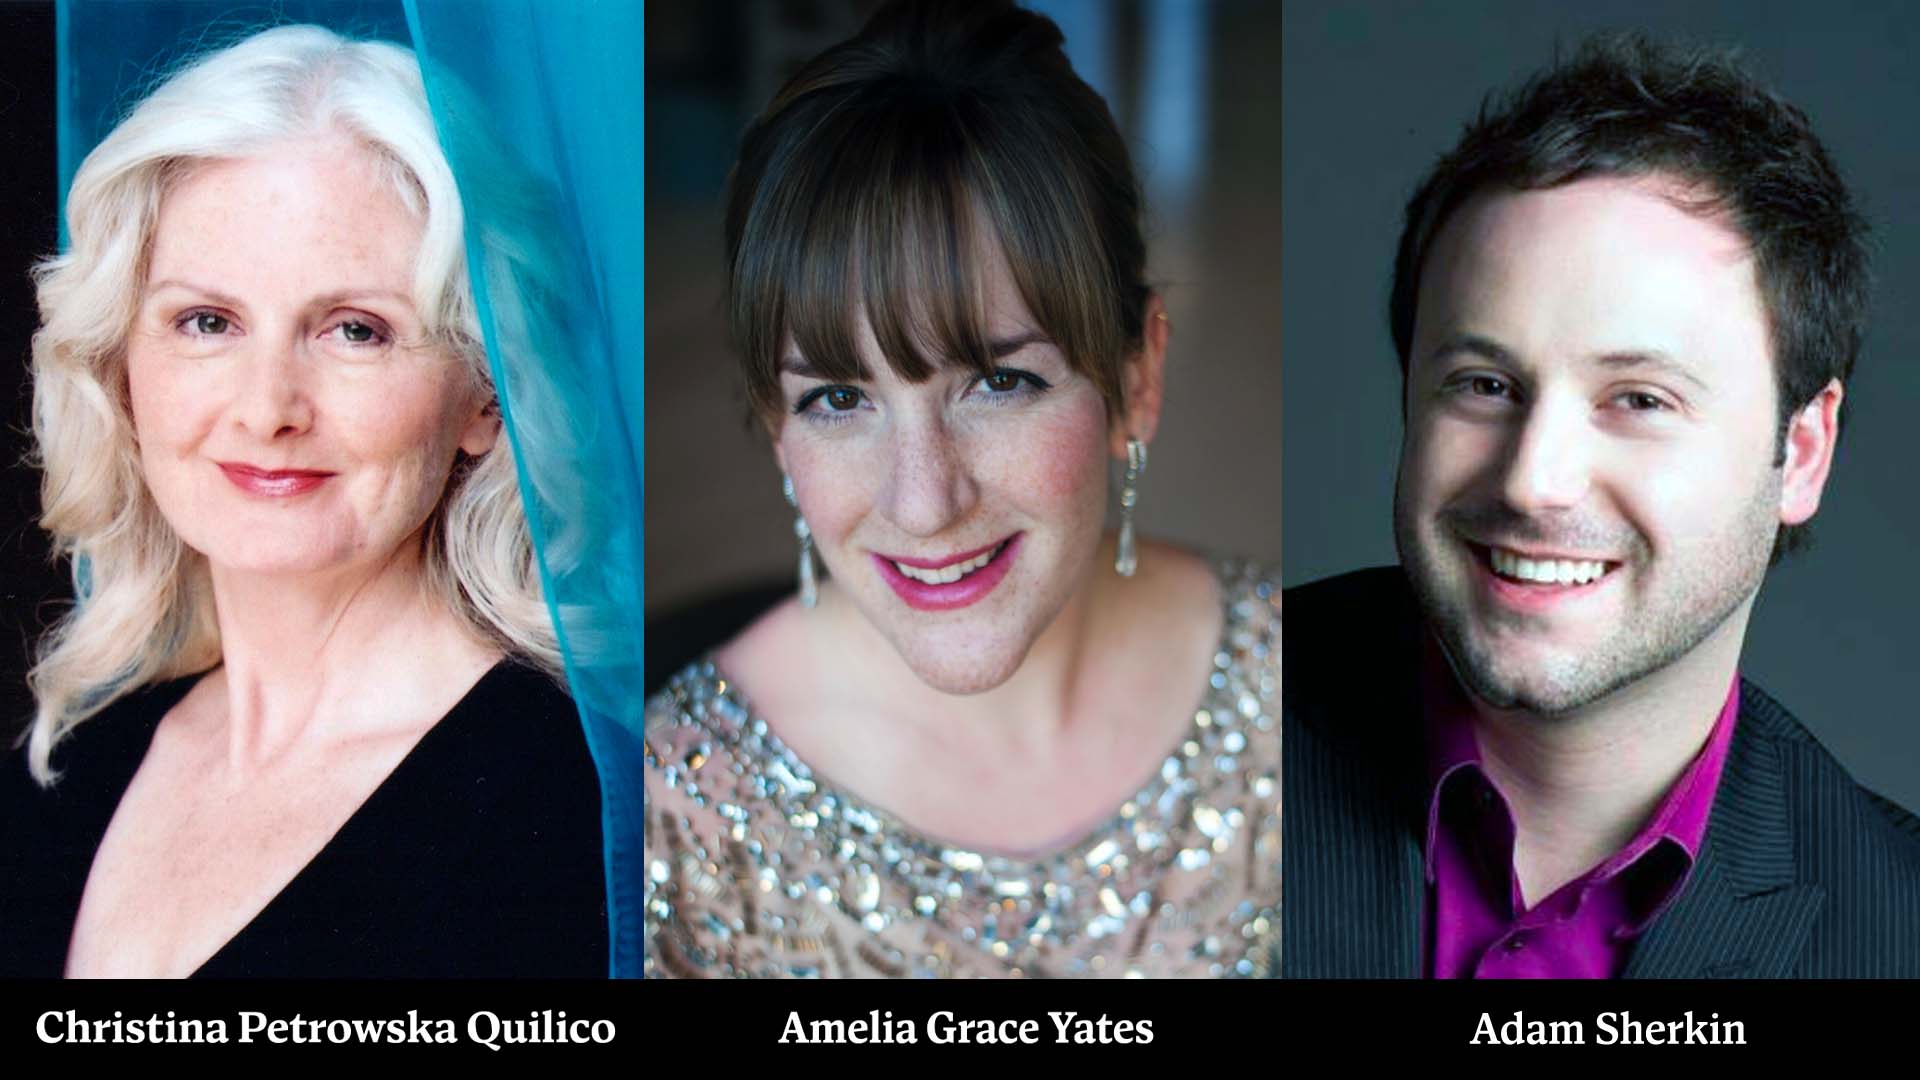 pianists Christina Petrowksa Quilico, Amelia Grace Yates and Adam Sherkin.